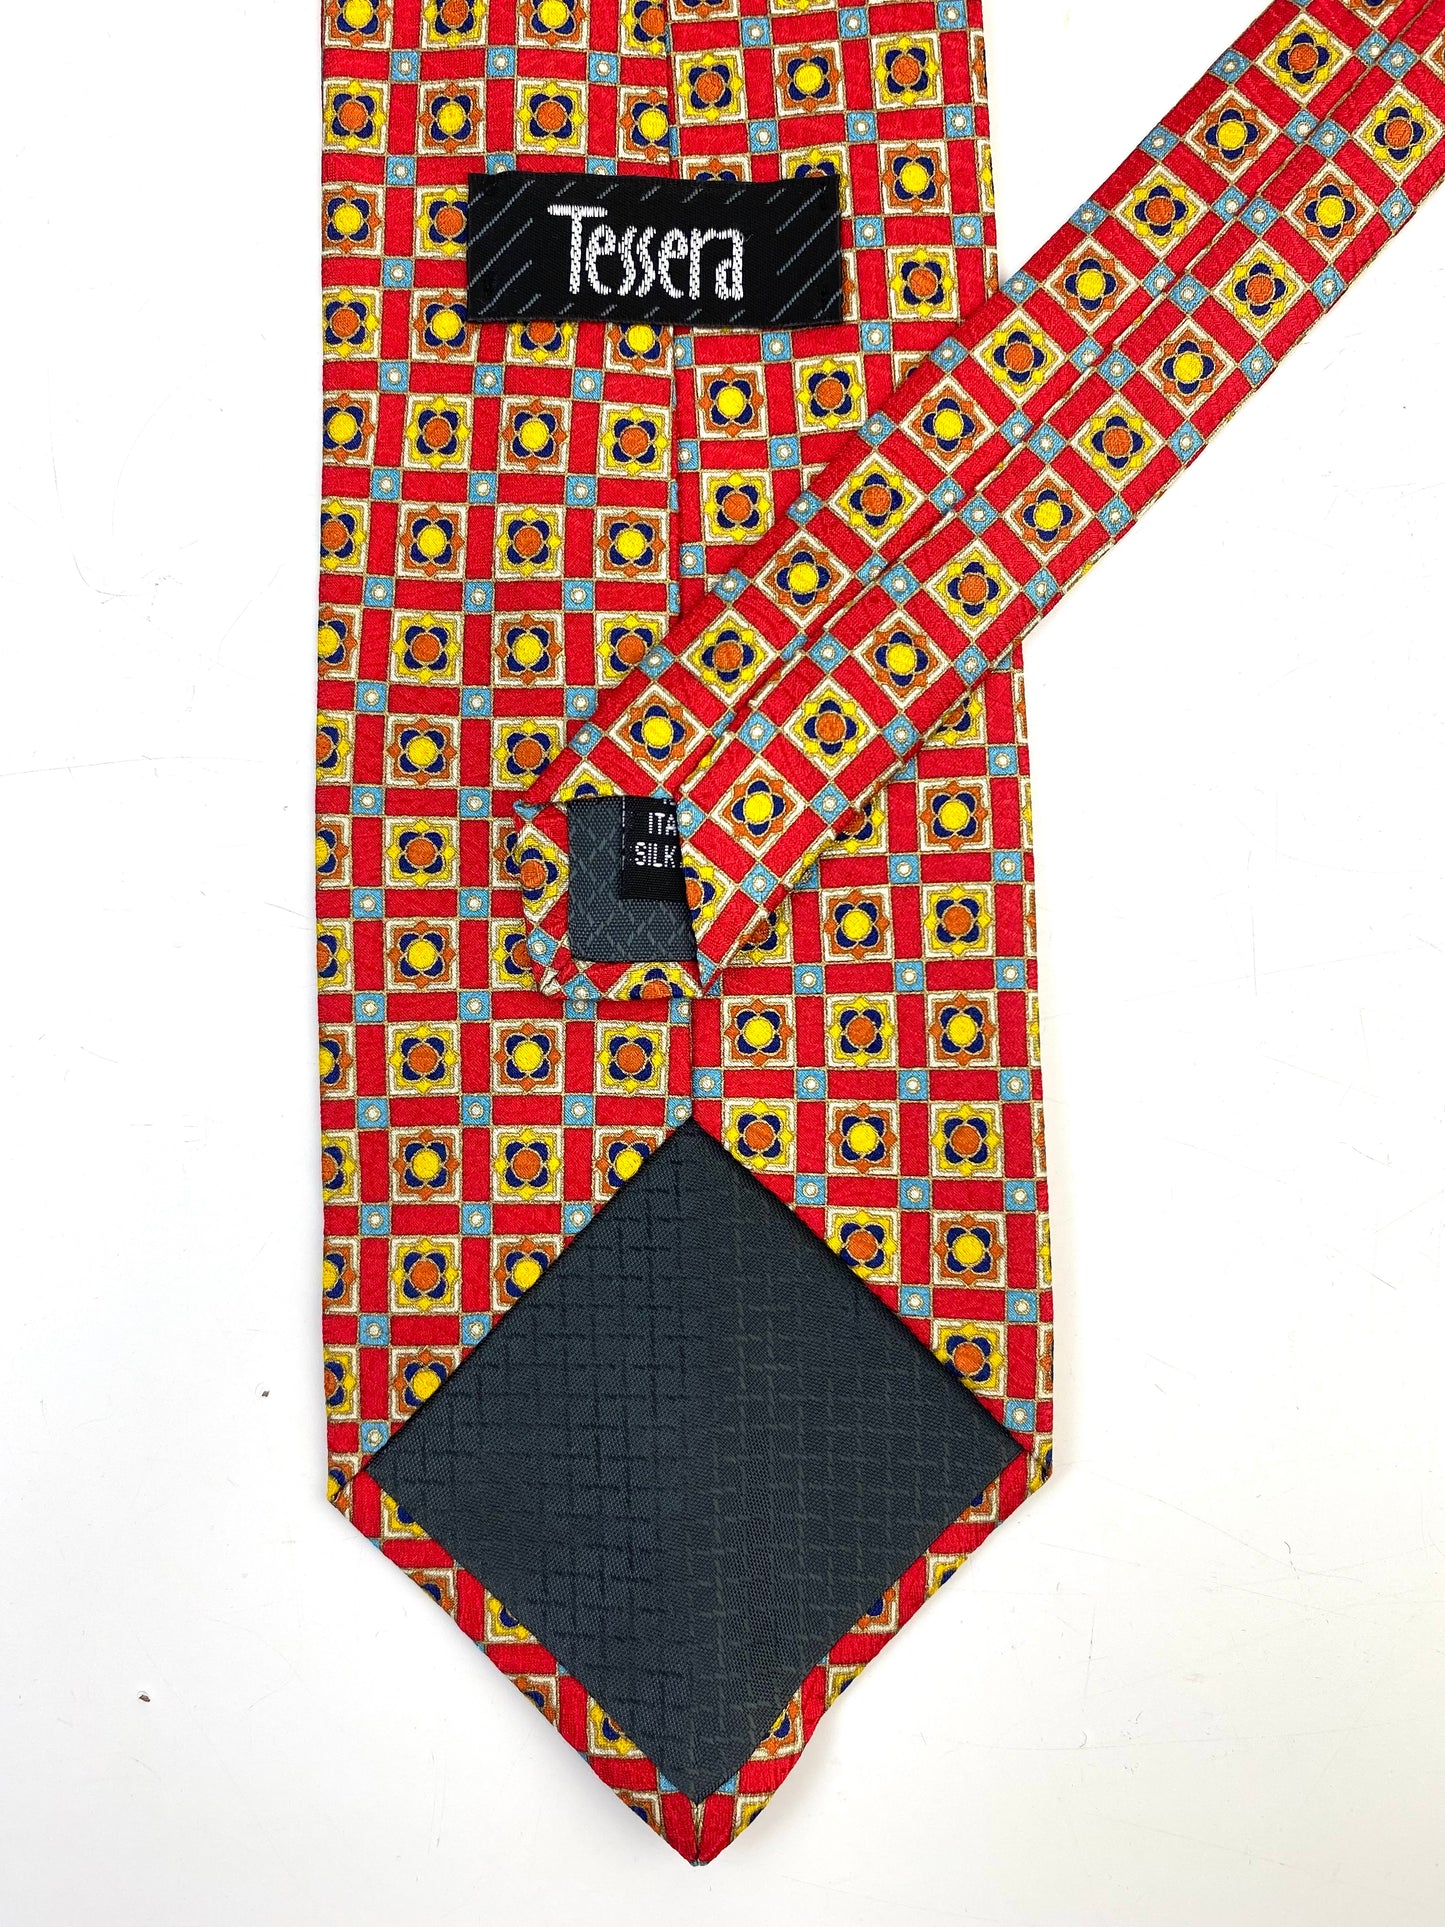 90s Deadstock Silk Necktie, Men's Vintage Red/ Gold Geometric Quatrefoil Pattern Tie, NOS